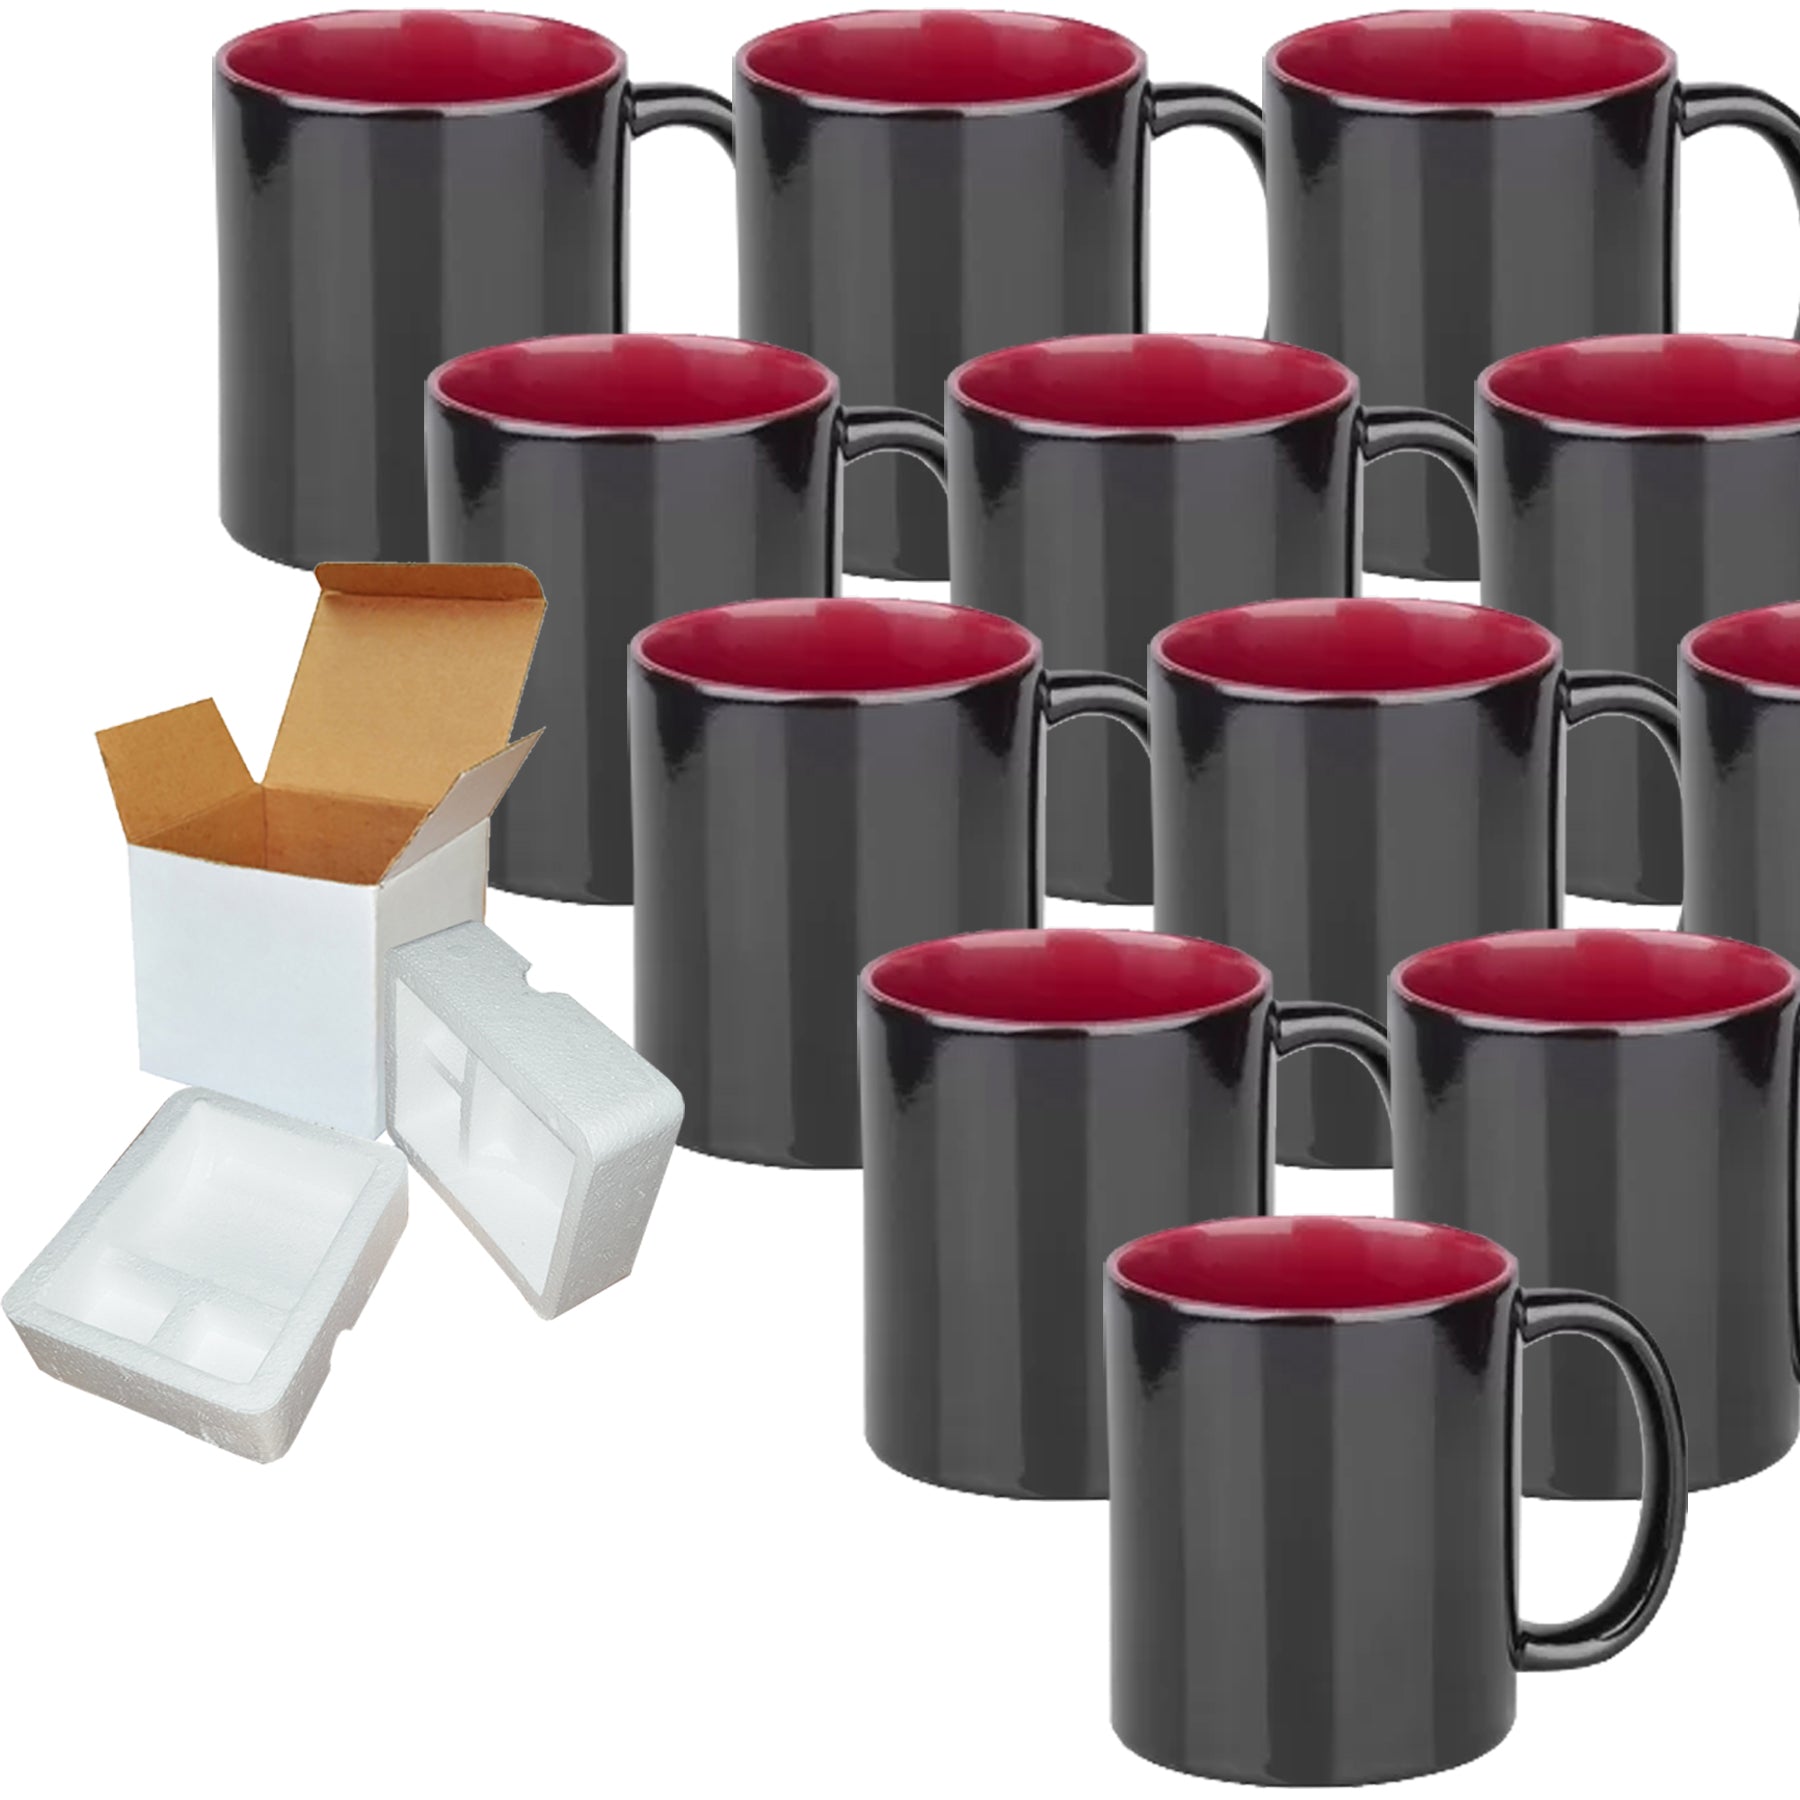 Shop Now for Bulk Sublimation Mugs - 12 Pack of 15oz Red Inner